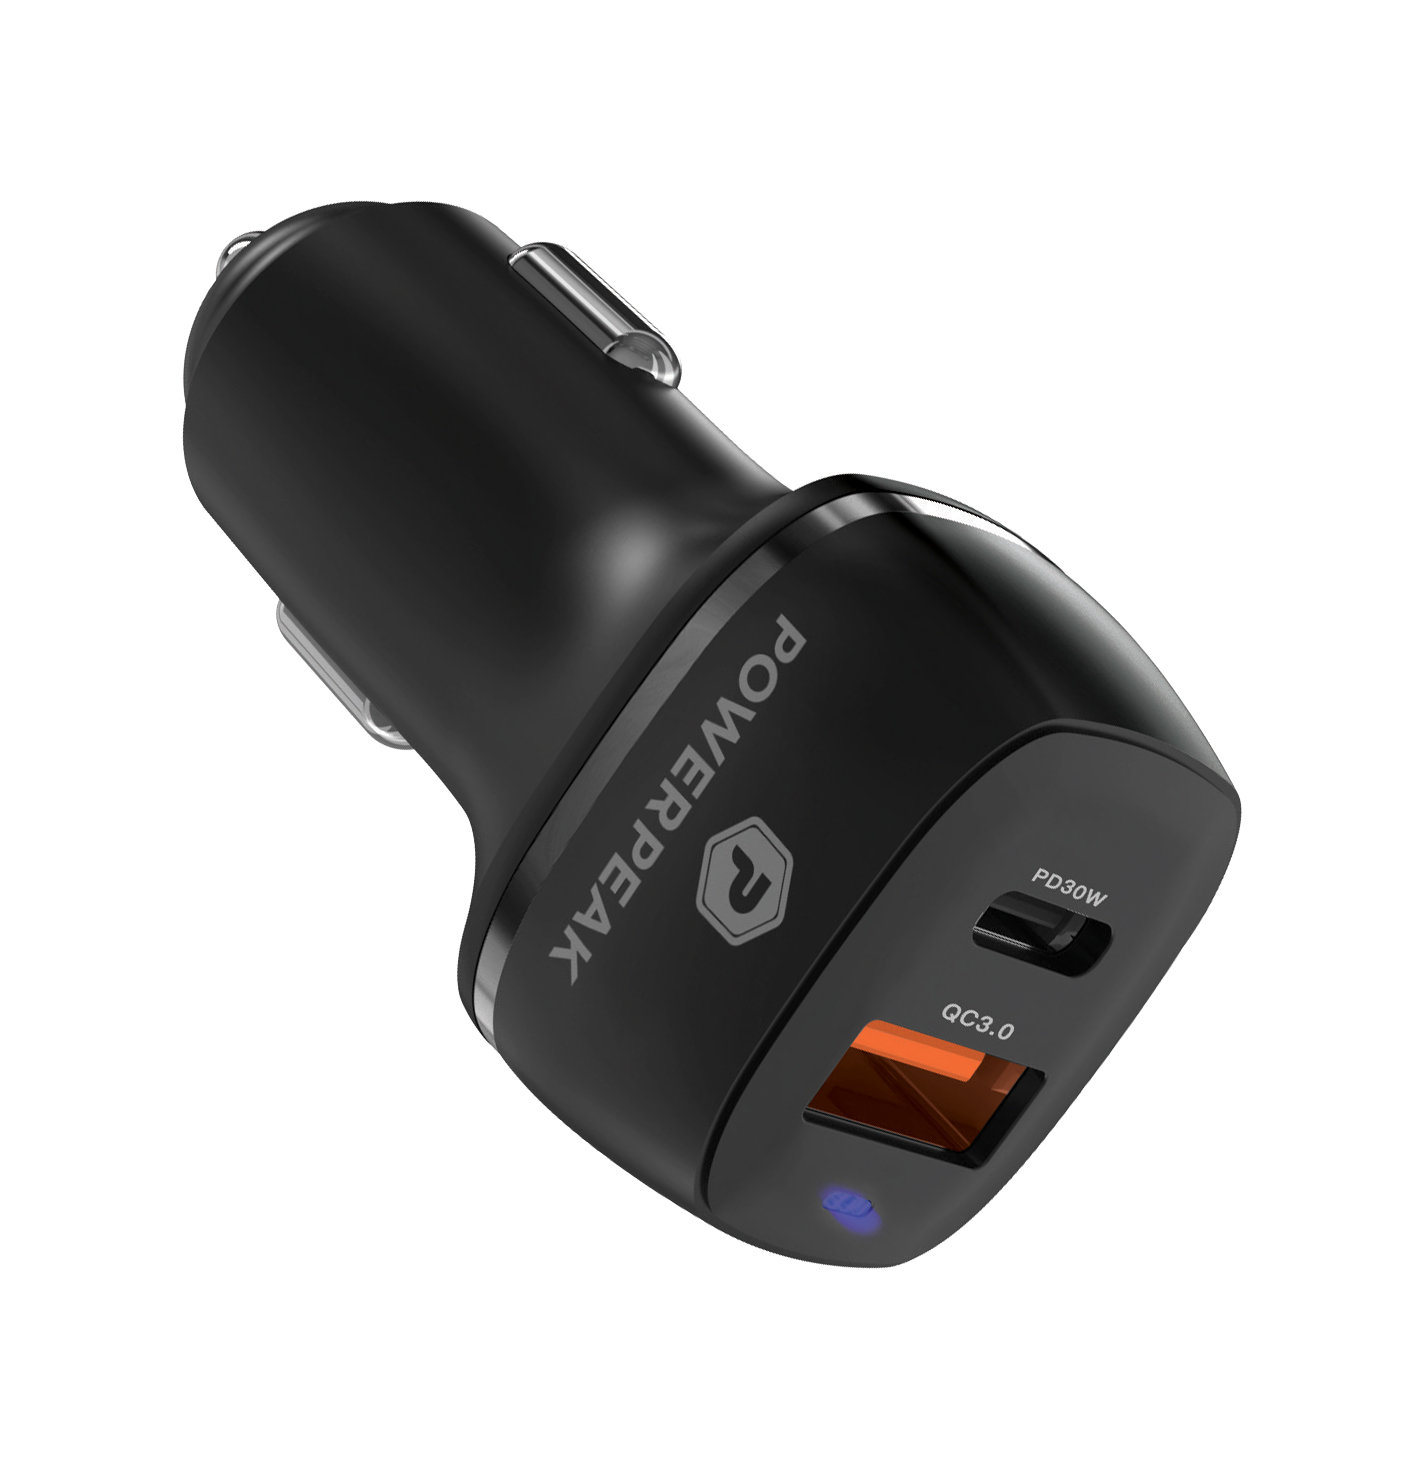 PowerPeak 30W Dual Port Car Charger USB-C to Lightning - Black